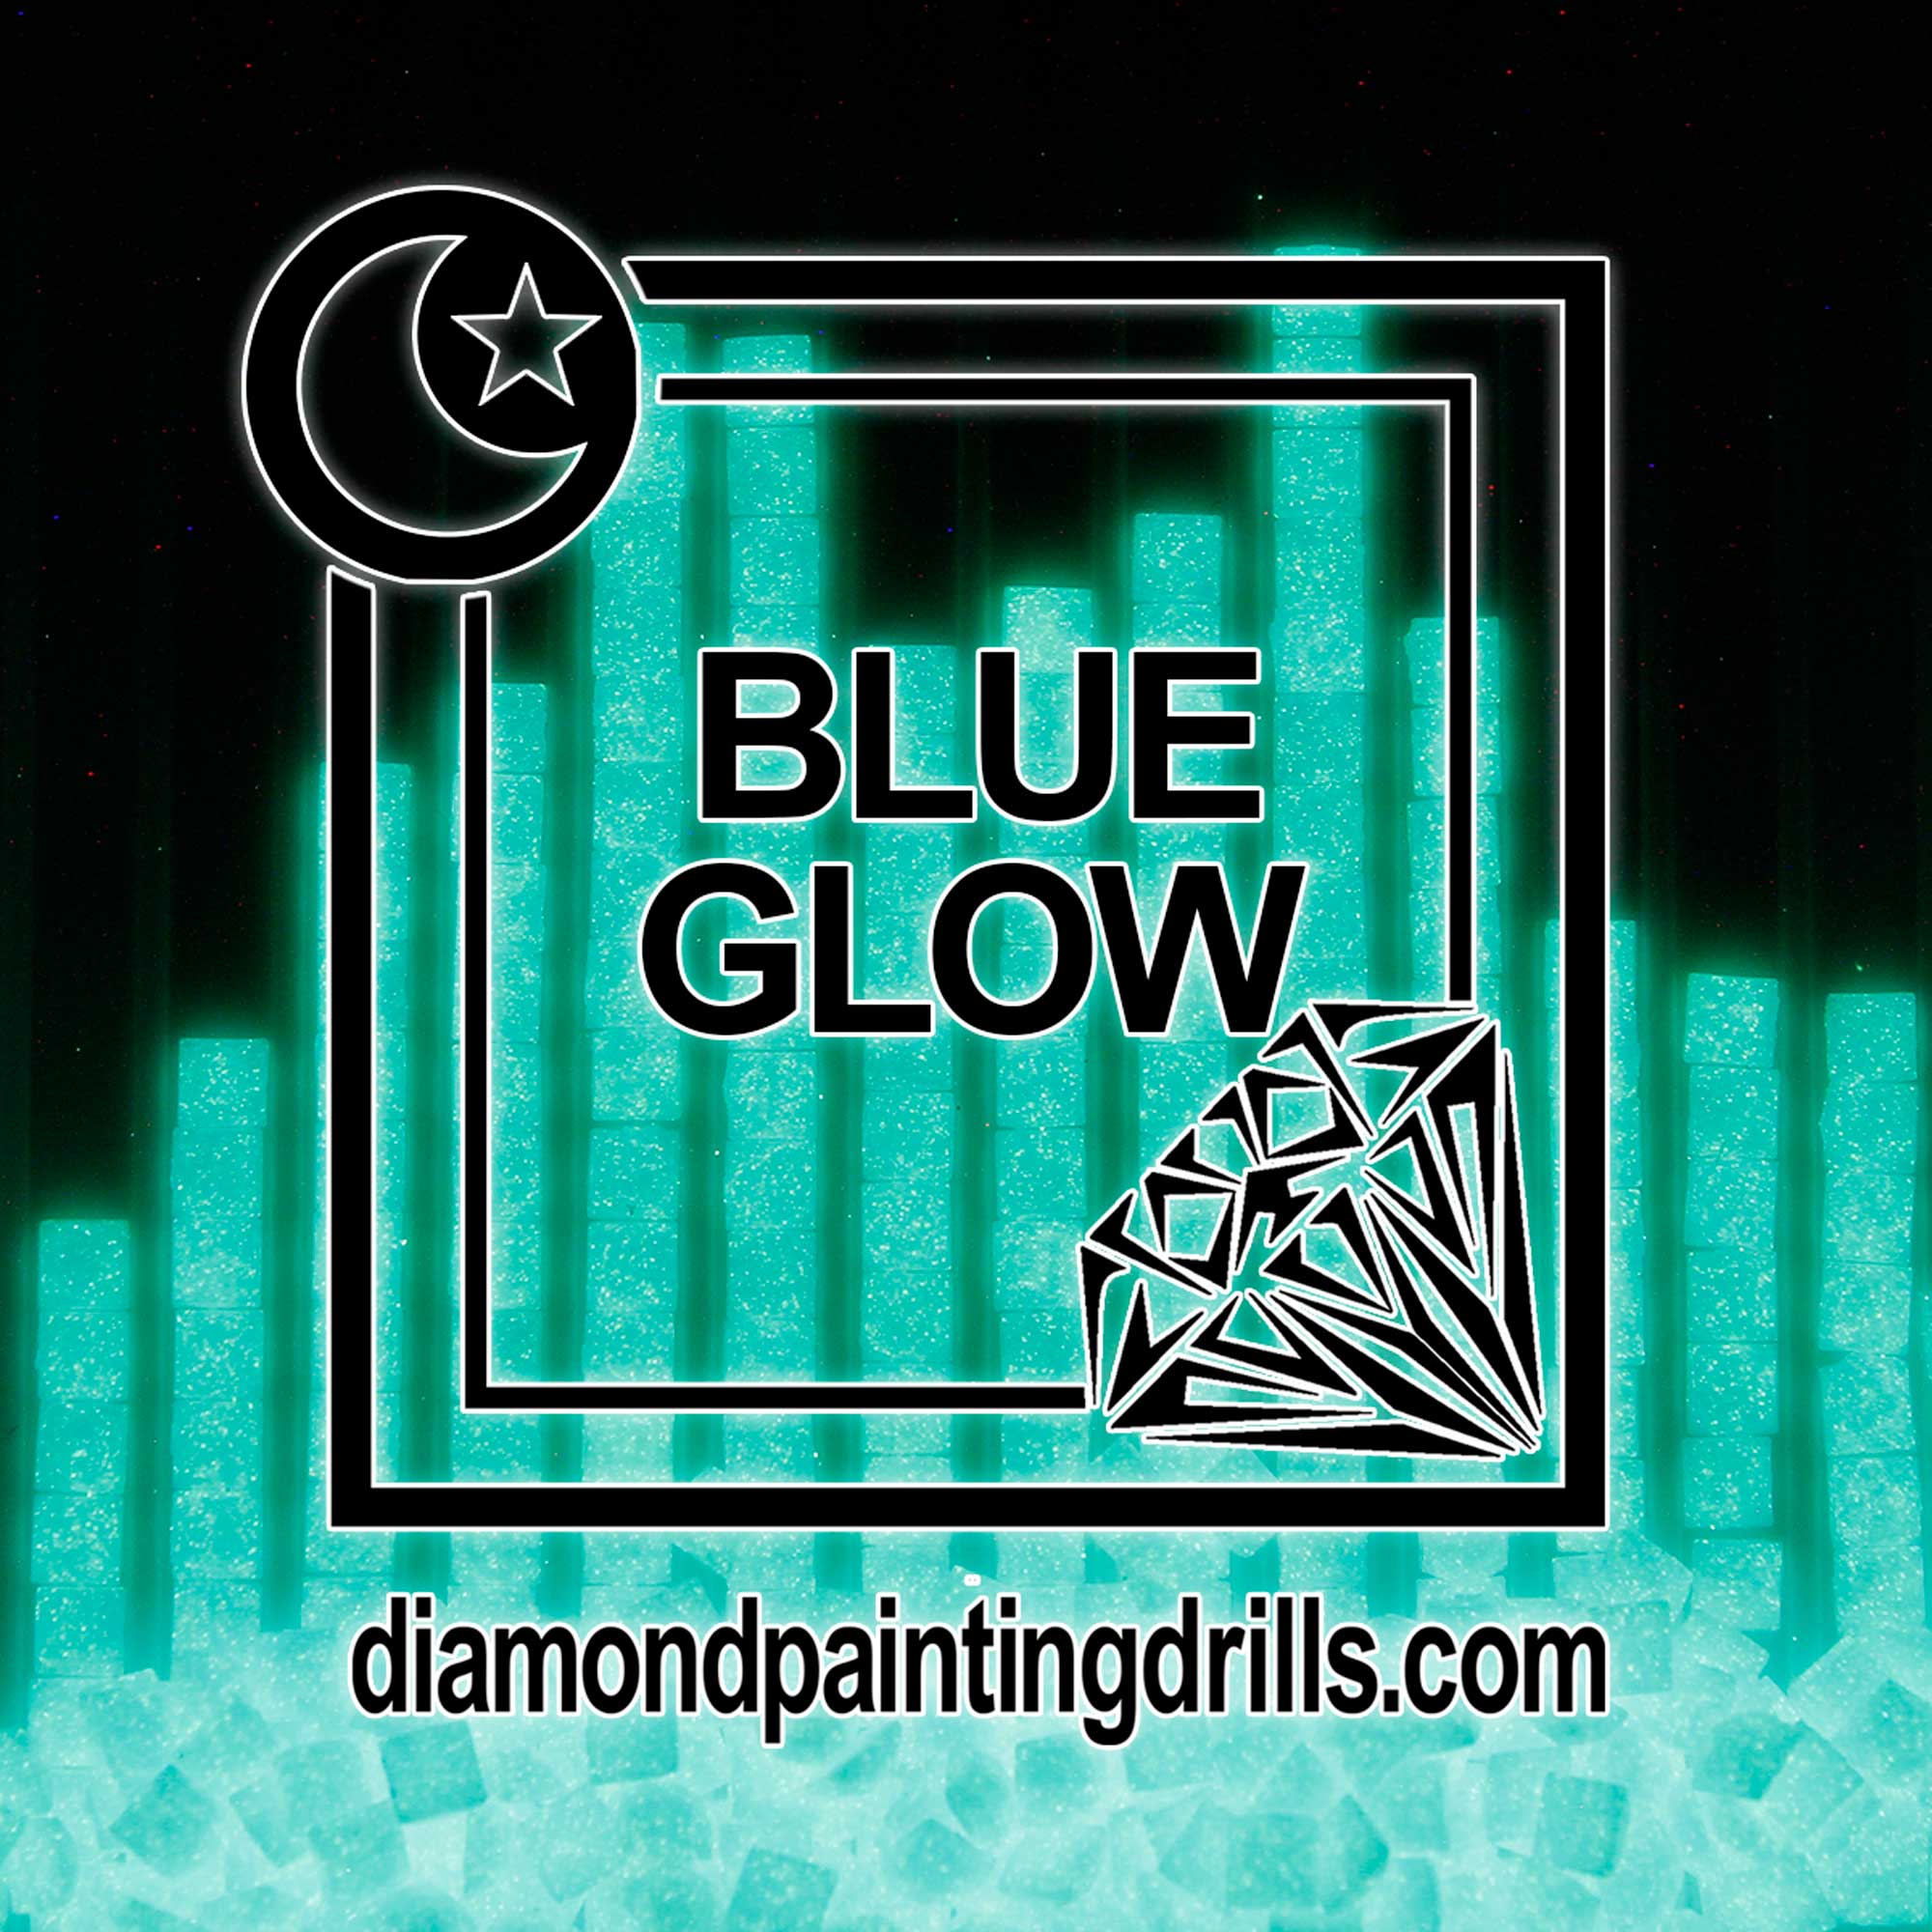 Blue Glow in the Dark Square Drills - Diamond Painting Drills